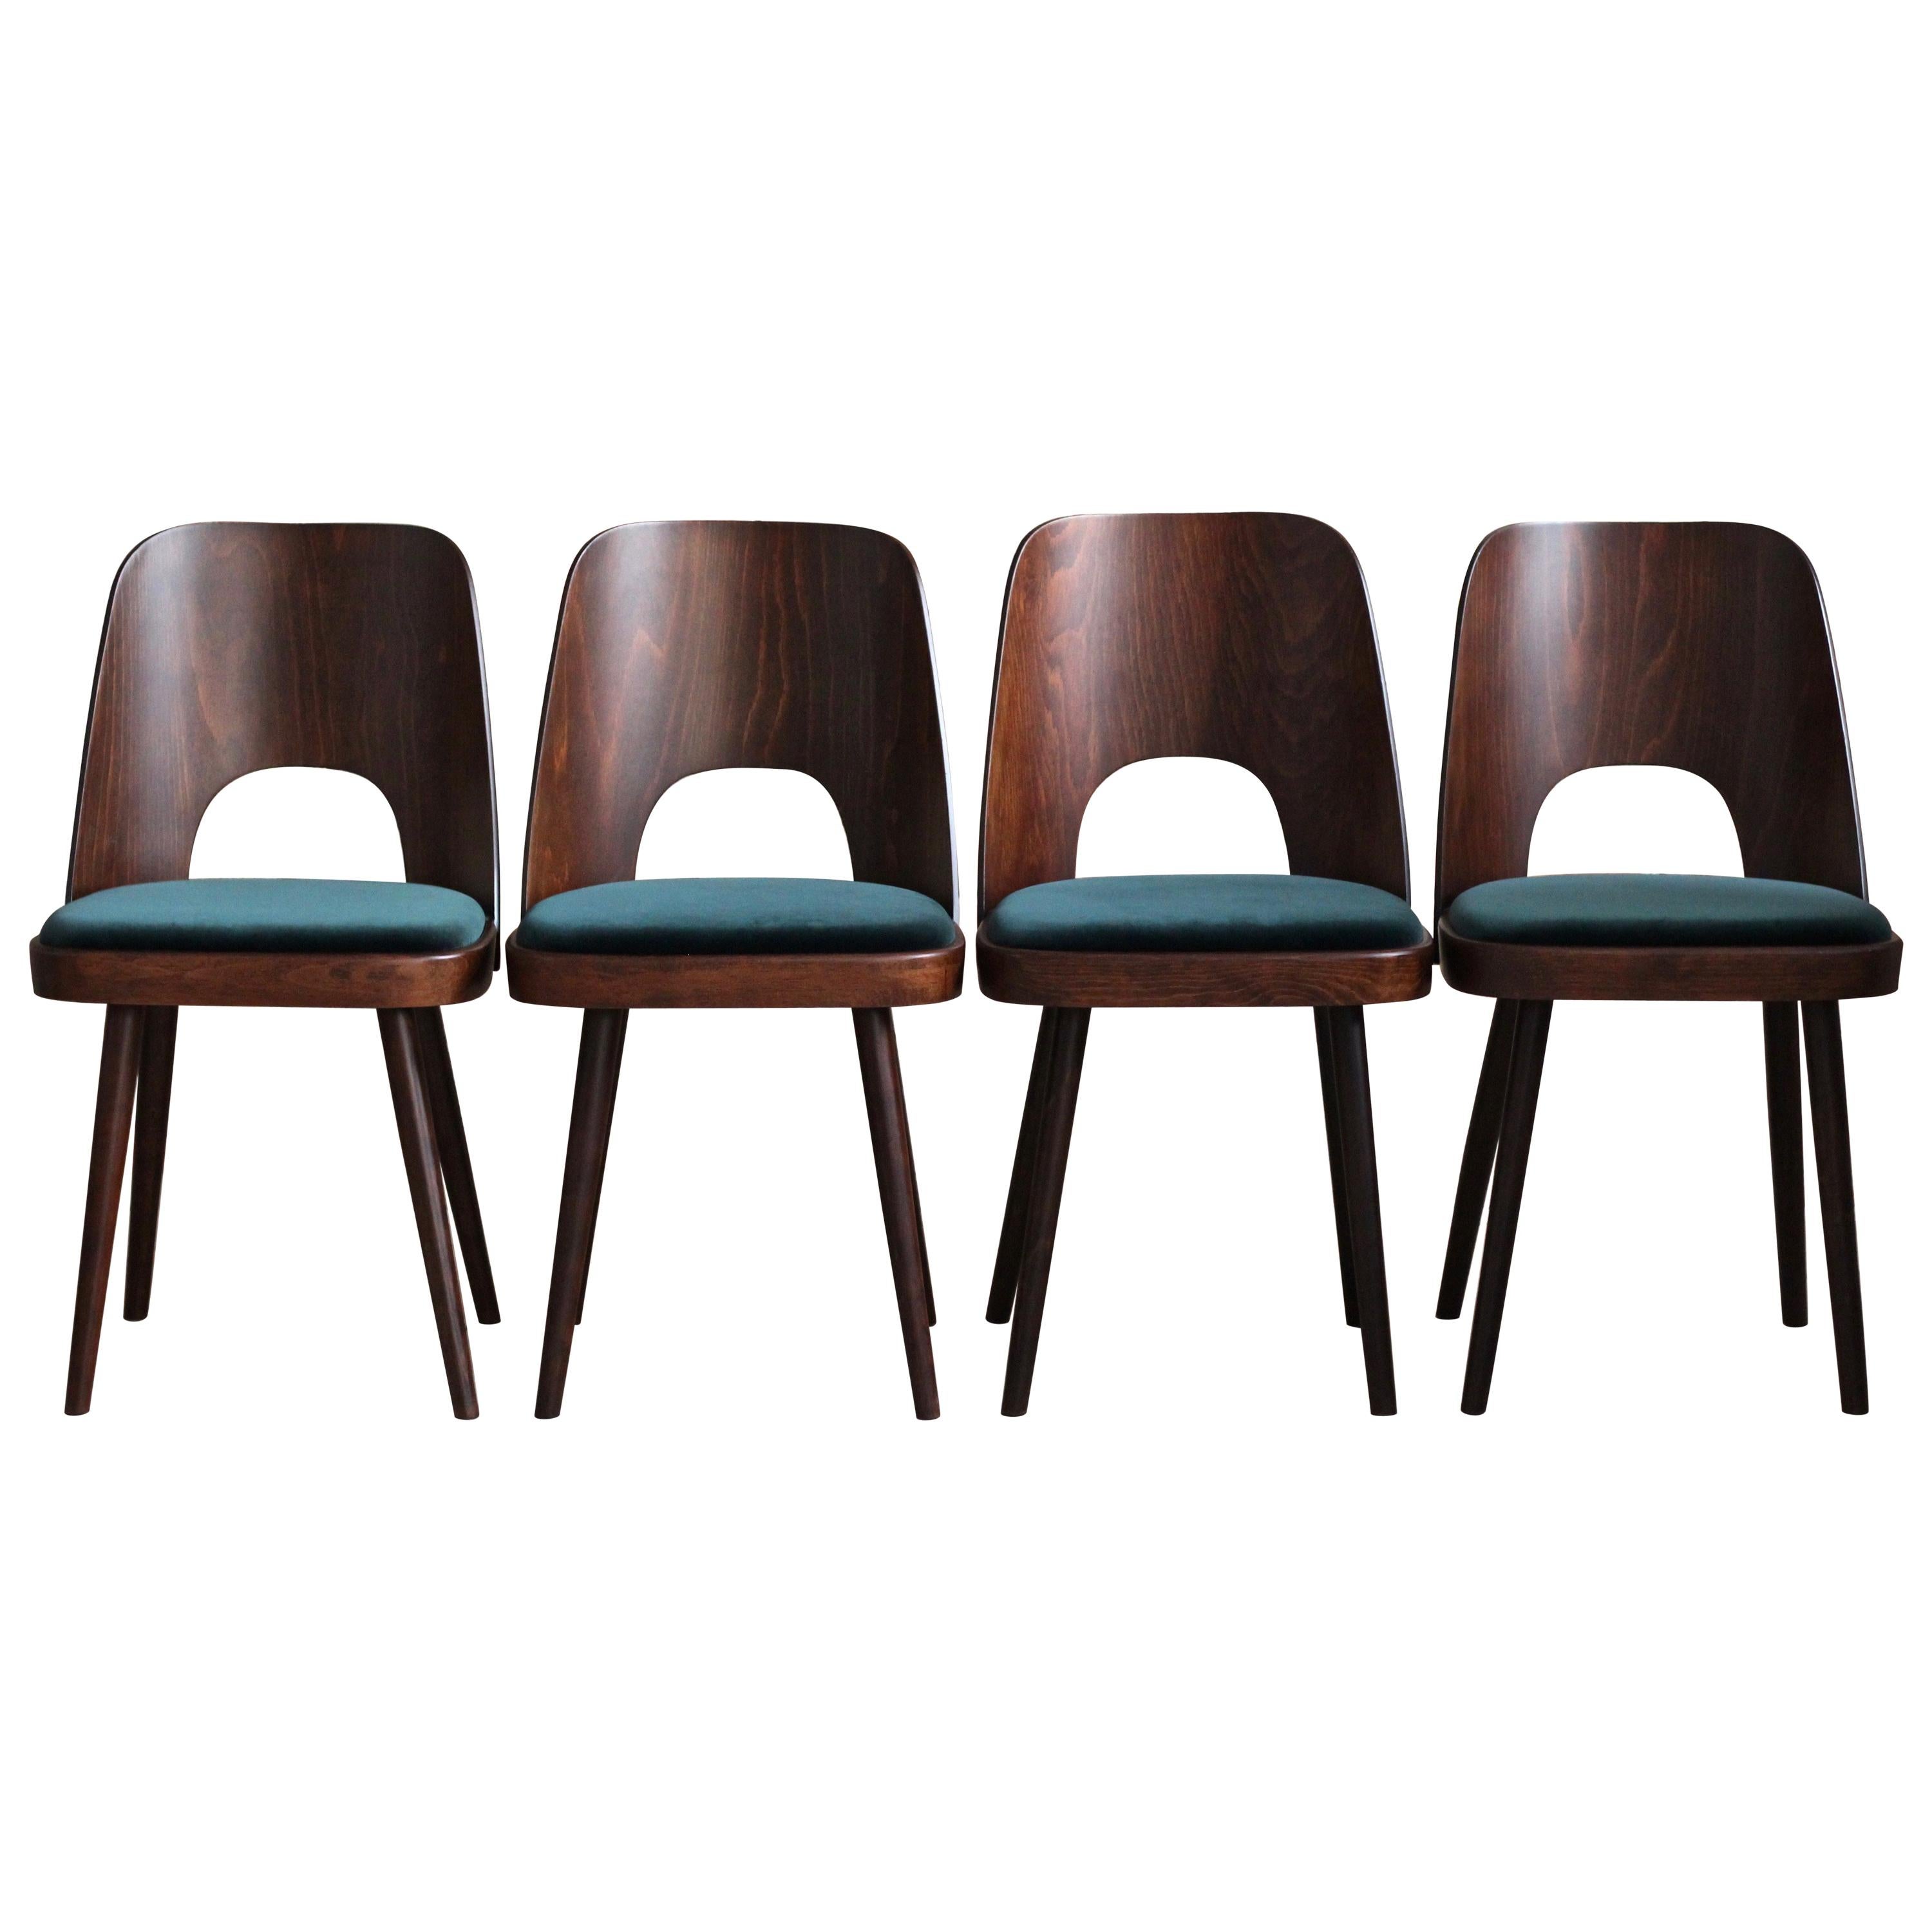 Set of 4 Dining Chairs by Oswald Haerdtl in Green Velvet by Kvadrat, Midcentury